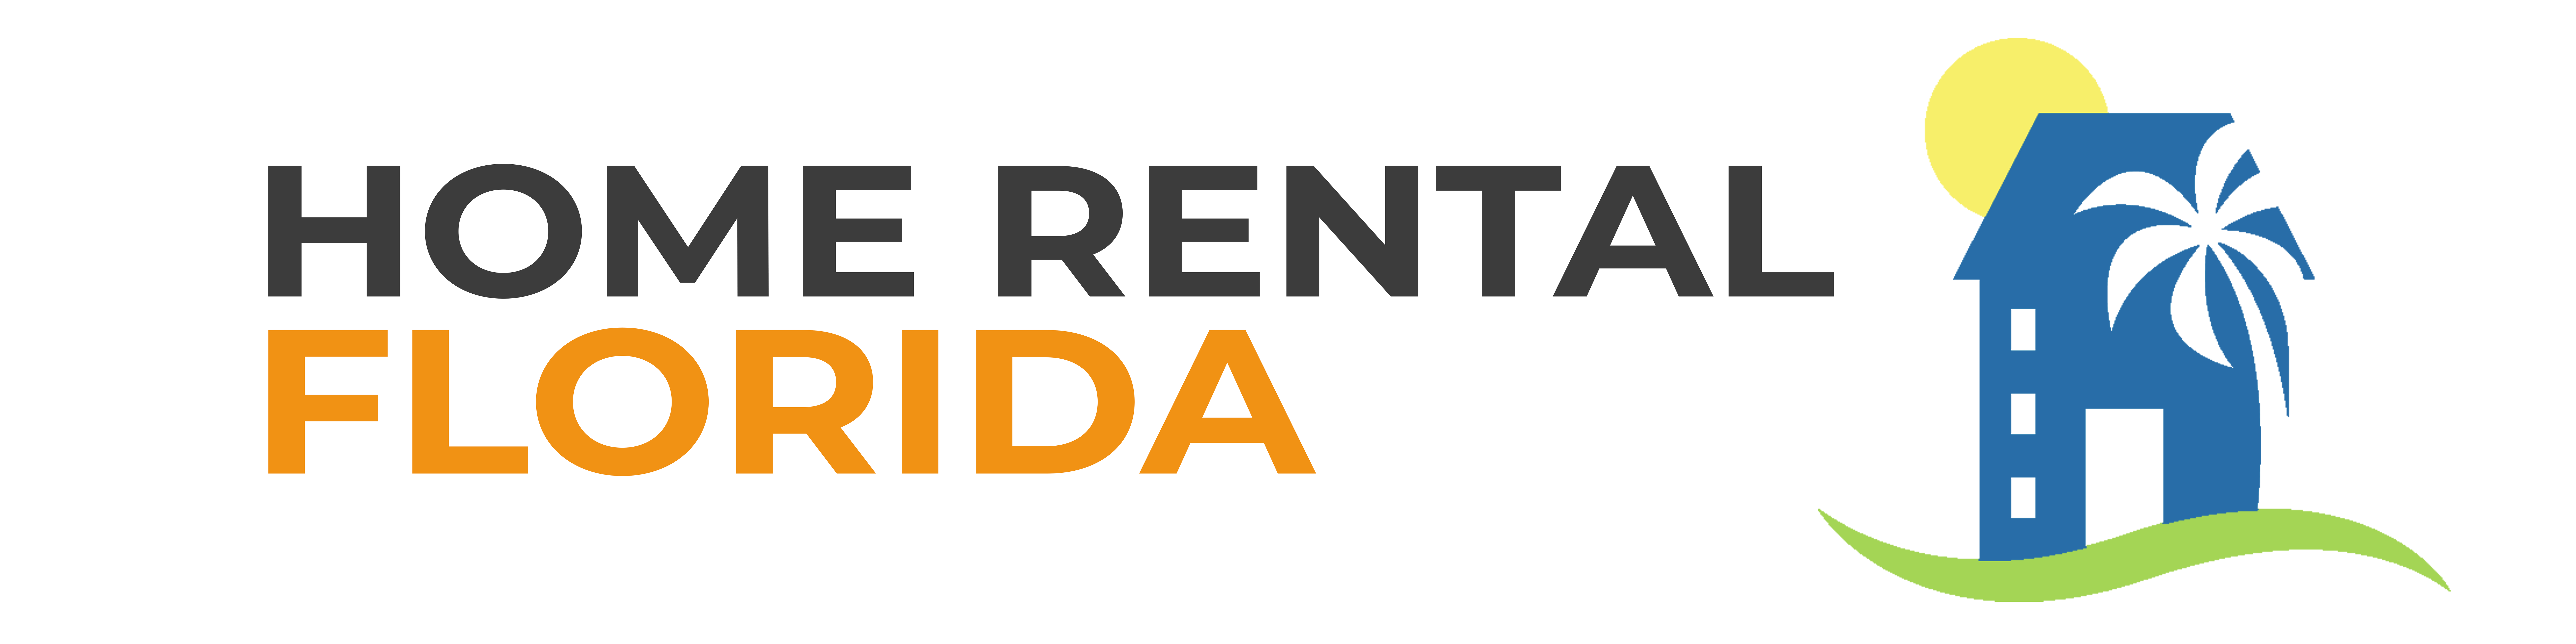 Home Rental Florida Logo